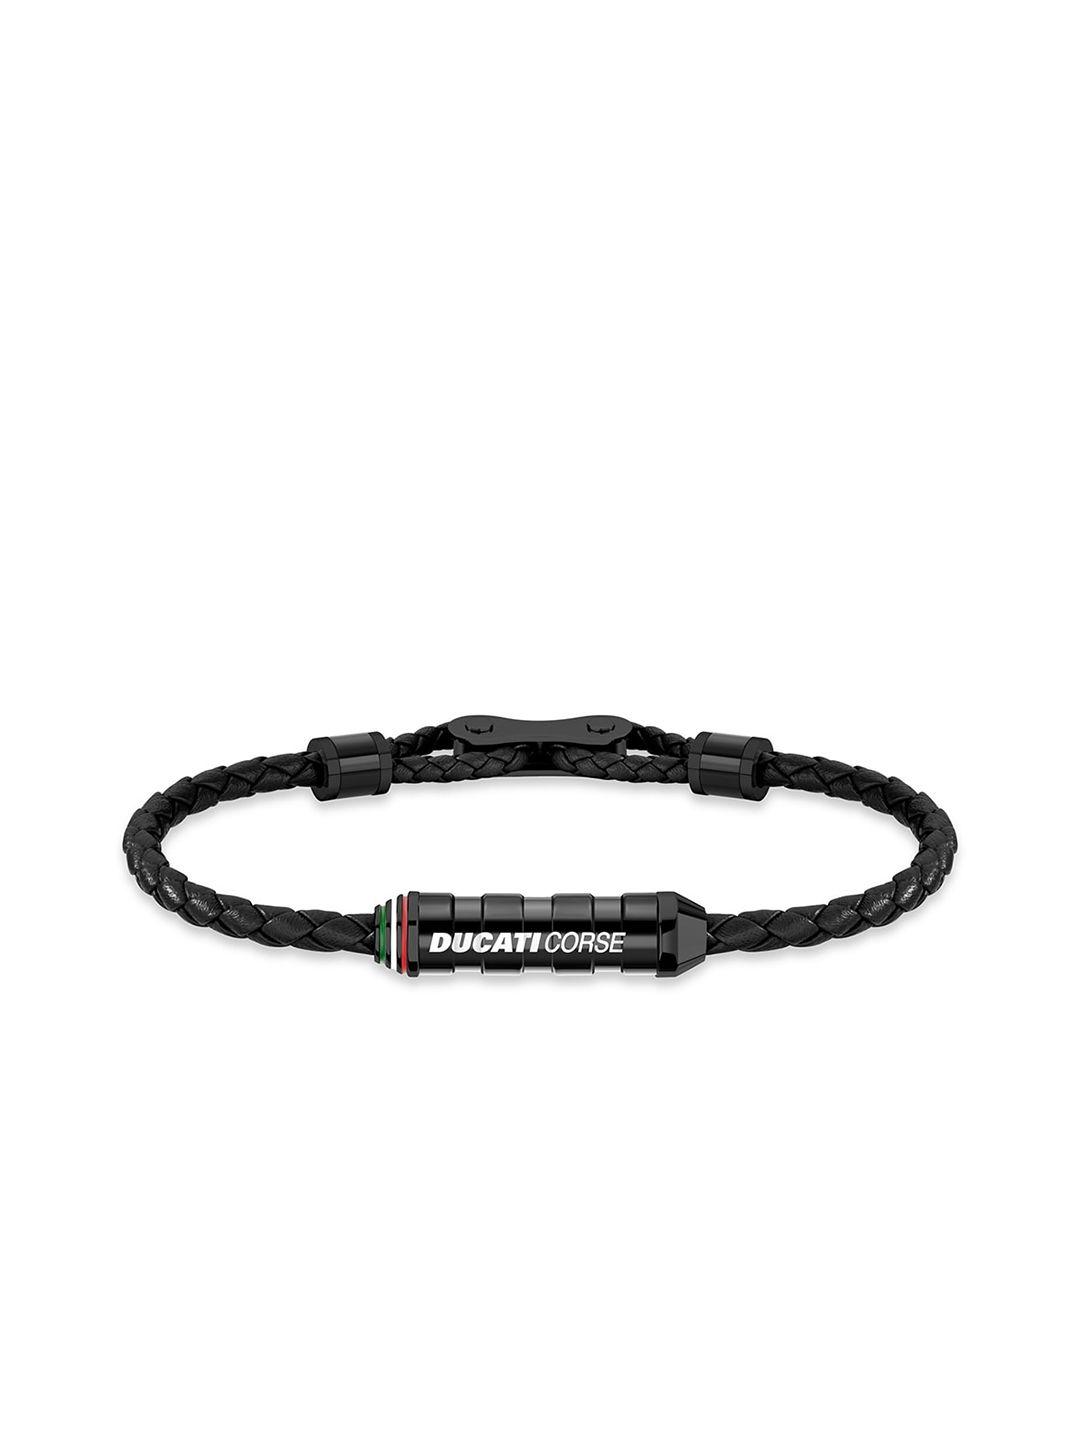 ducati corse men grey & black cuff bracelet